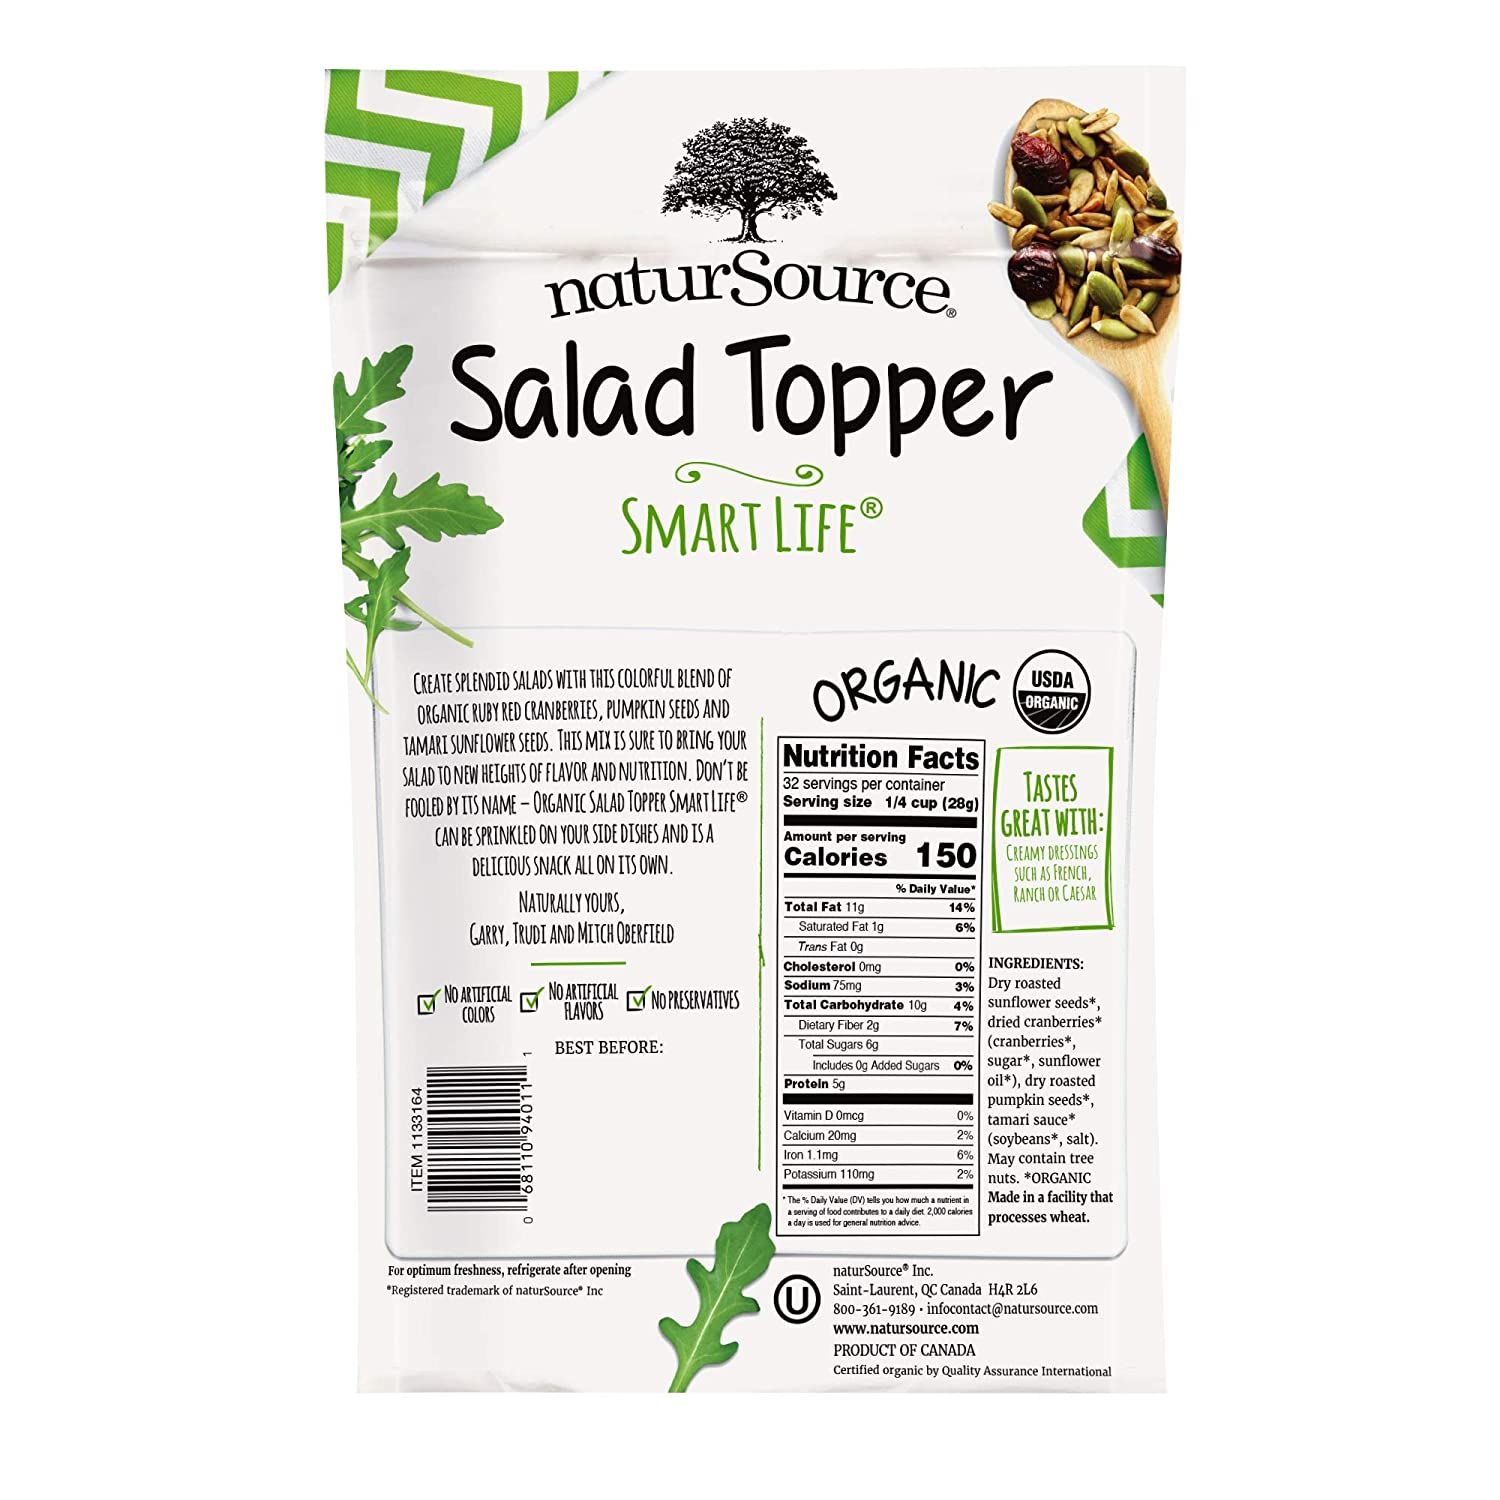  Hạt Hỗn Hợp Trộn Salad NaturSource Organic Salad Topper 907g_Mỹ 